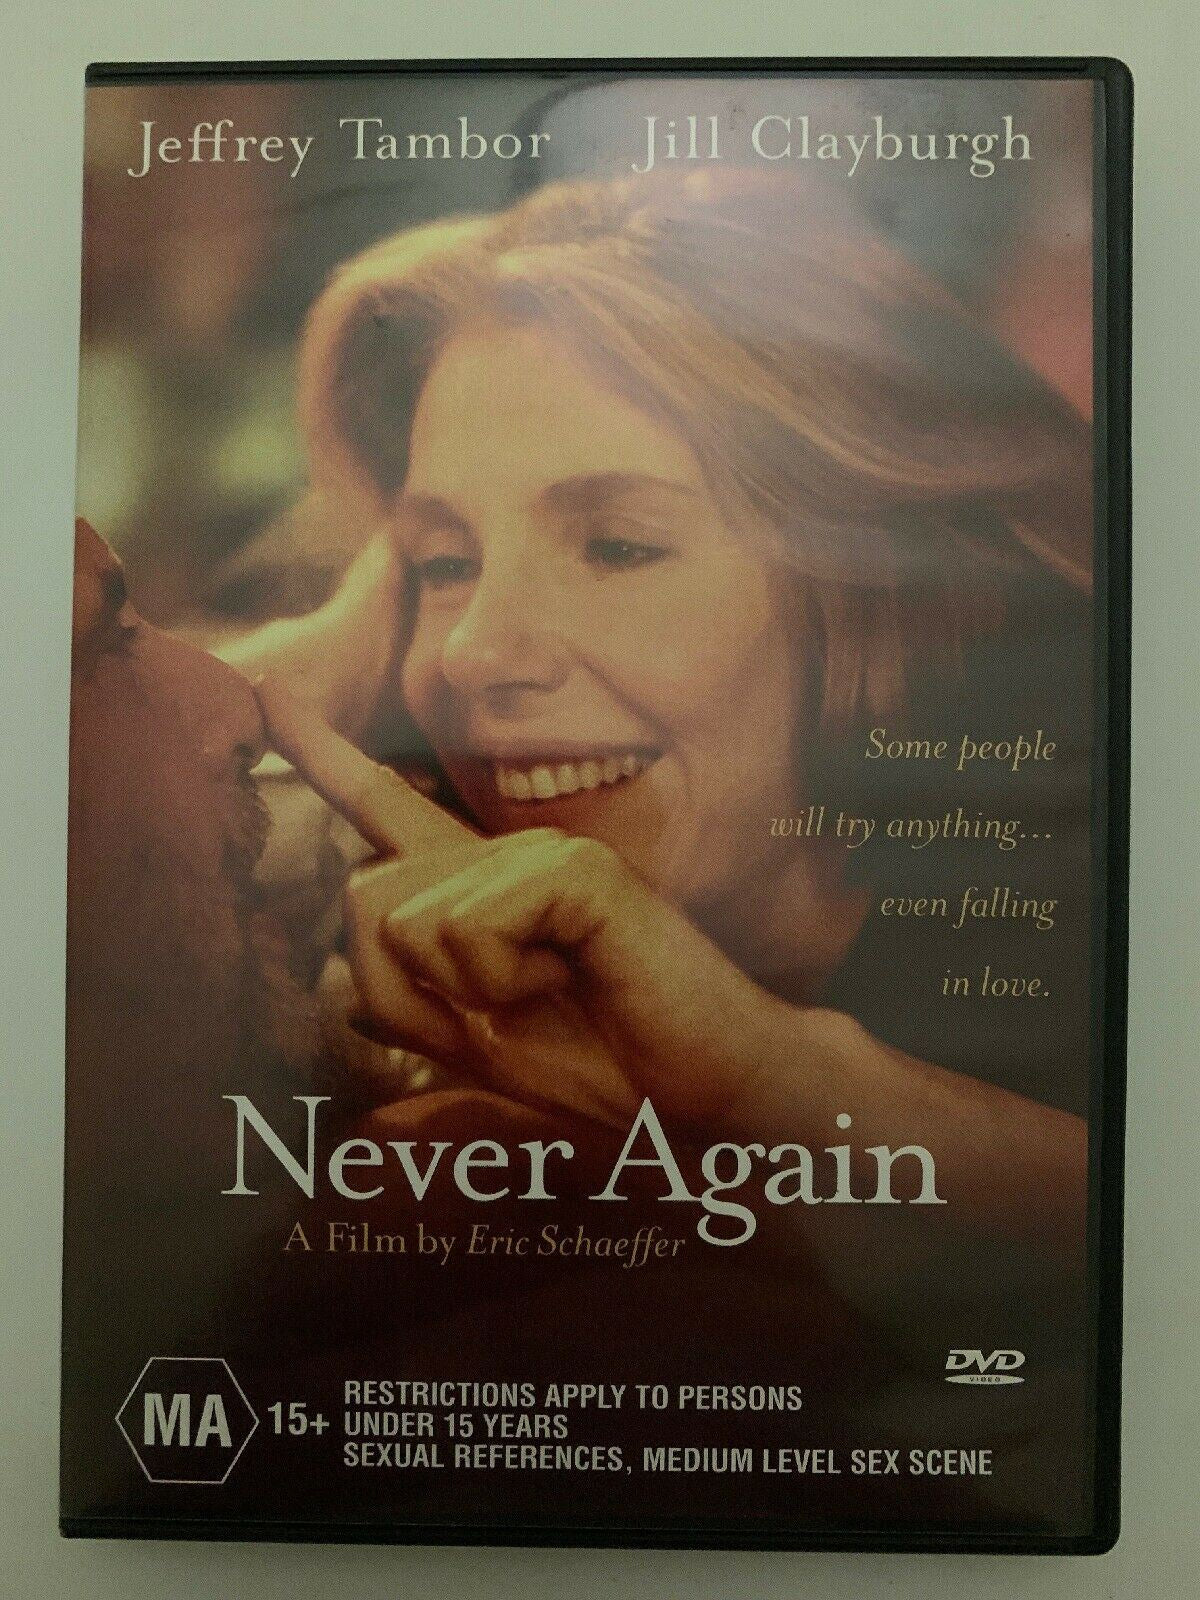 Never Again (DVD, 2001) Jeffrey Tambor, Jill Clayburgh, Eric Schaeffer. Region 4